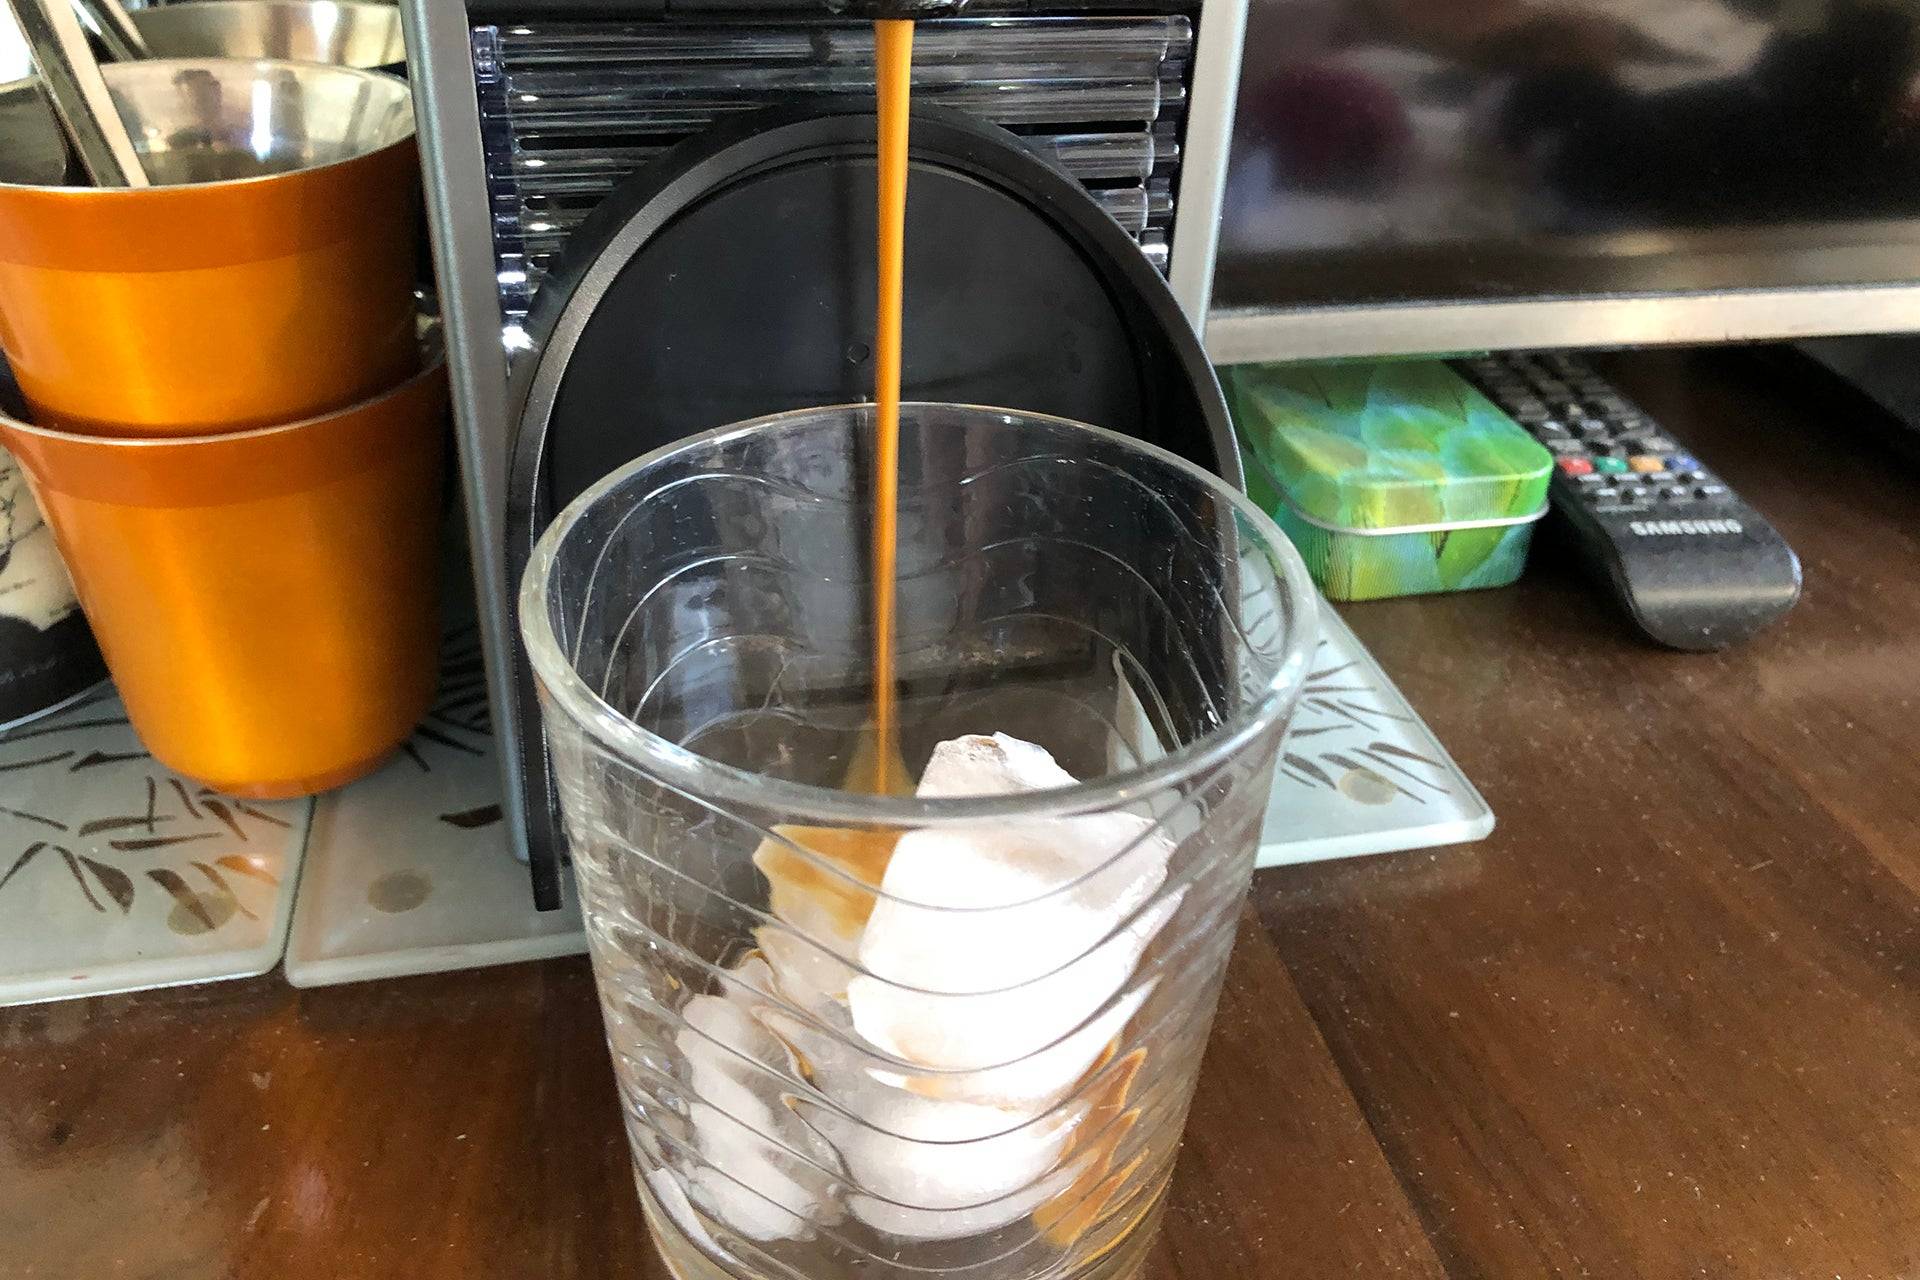 Iced Coffee Using Nespresso Machine